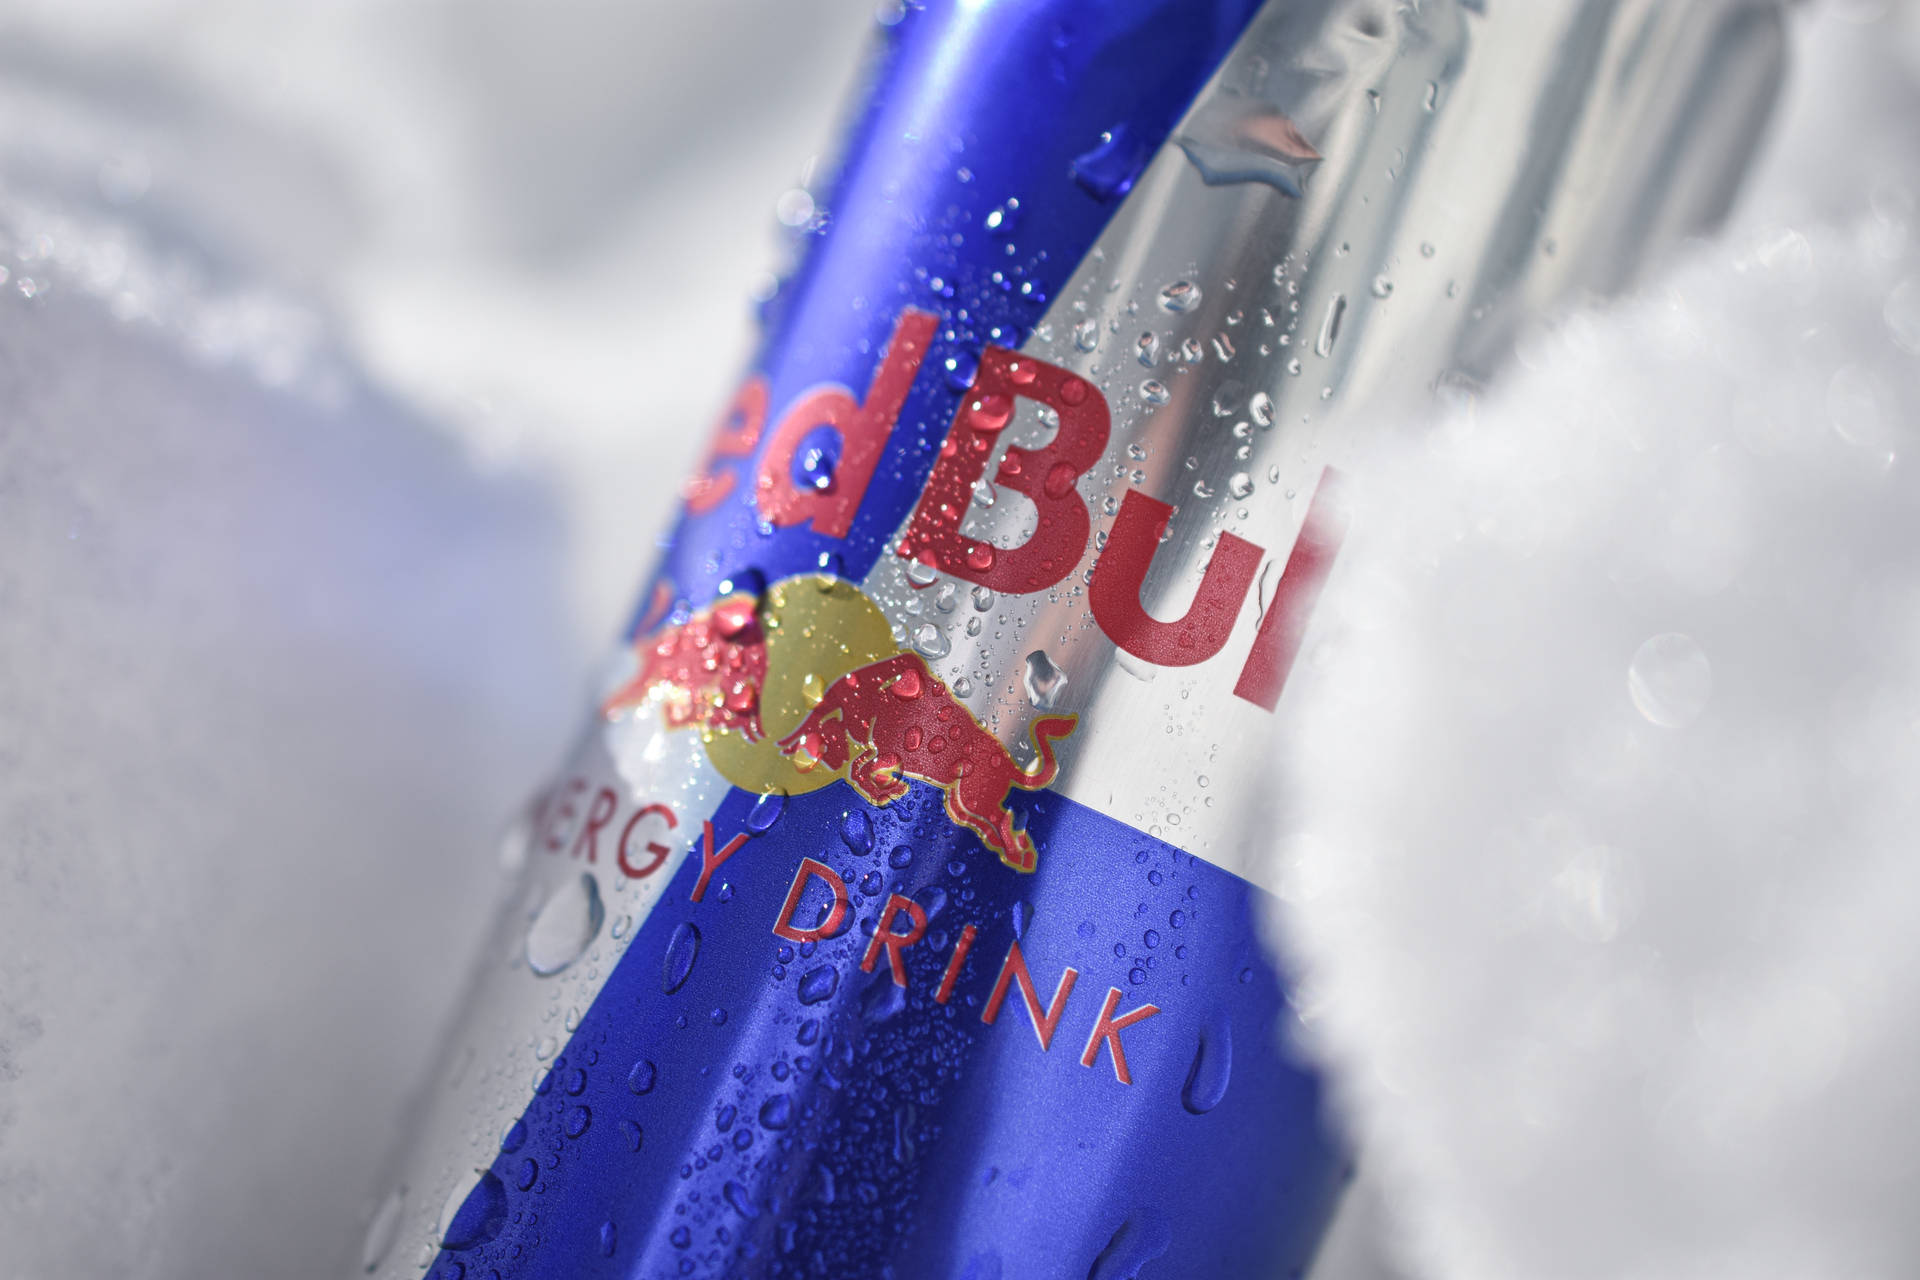 Red Bull Can Snow Macro